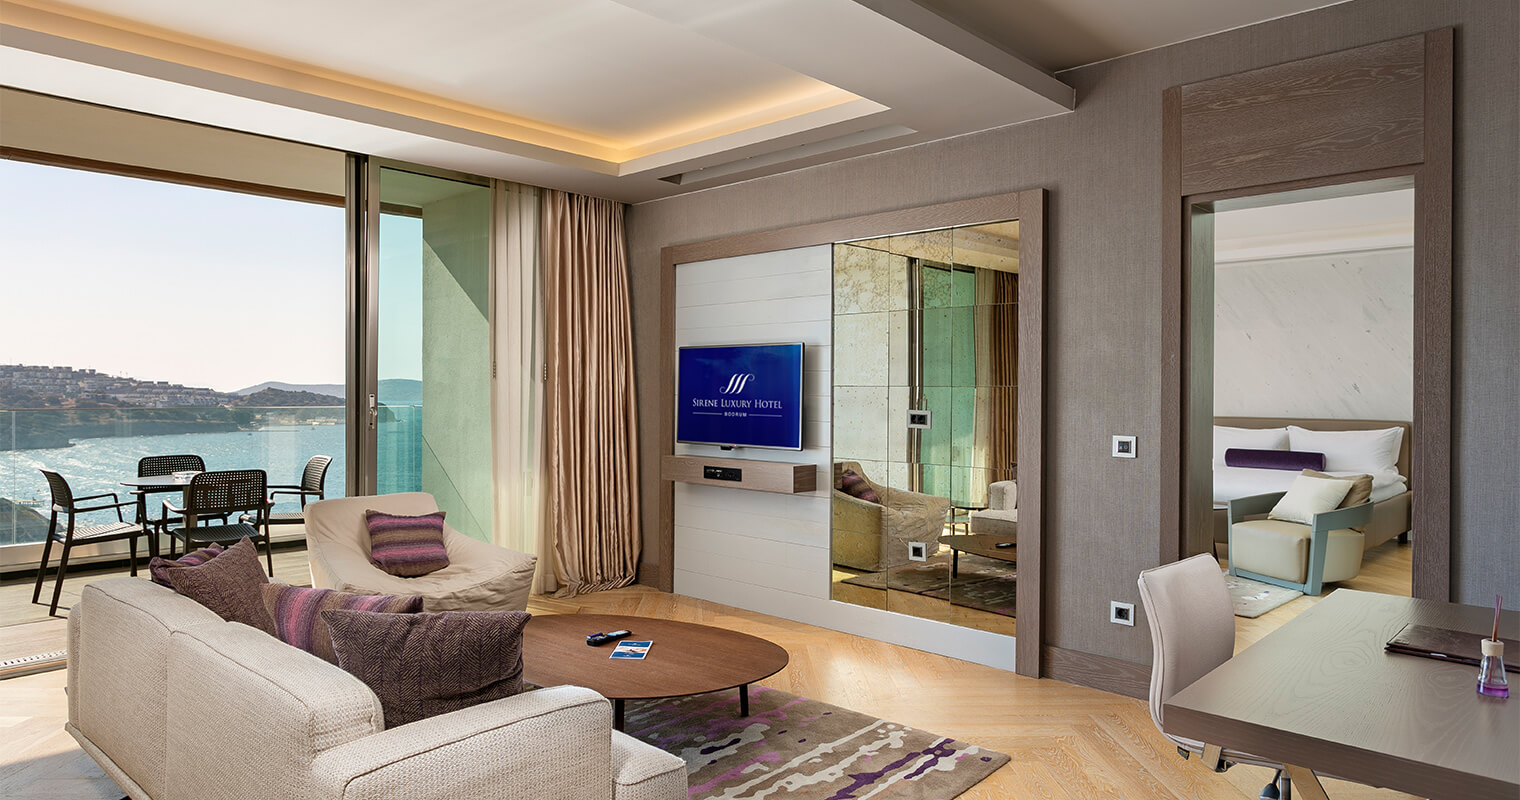 Sirene Bodrum Hotel Presidential Suite Center Desktop